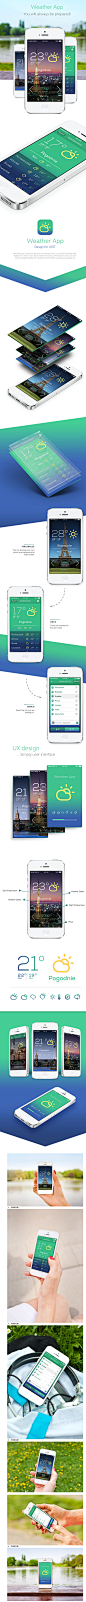 Weather App - iOS 7 app on Behance